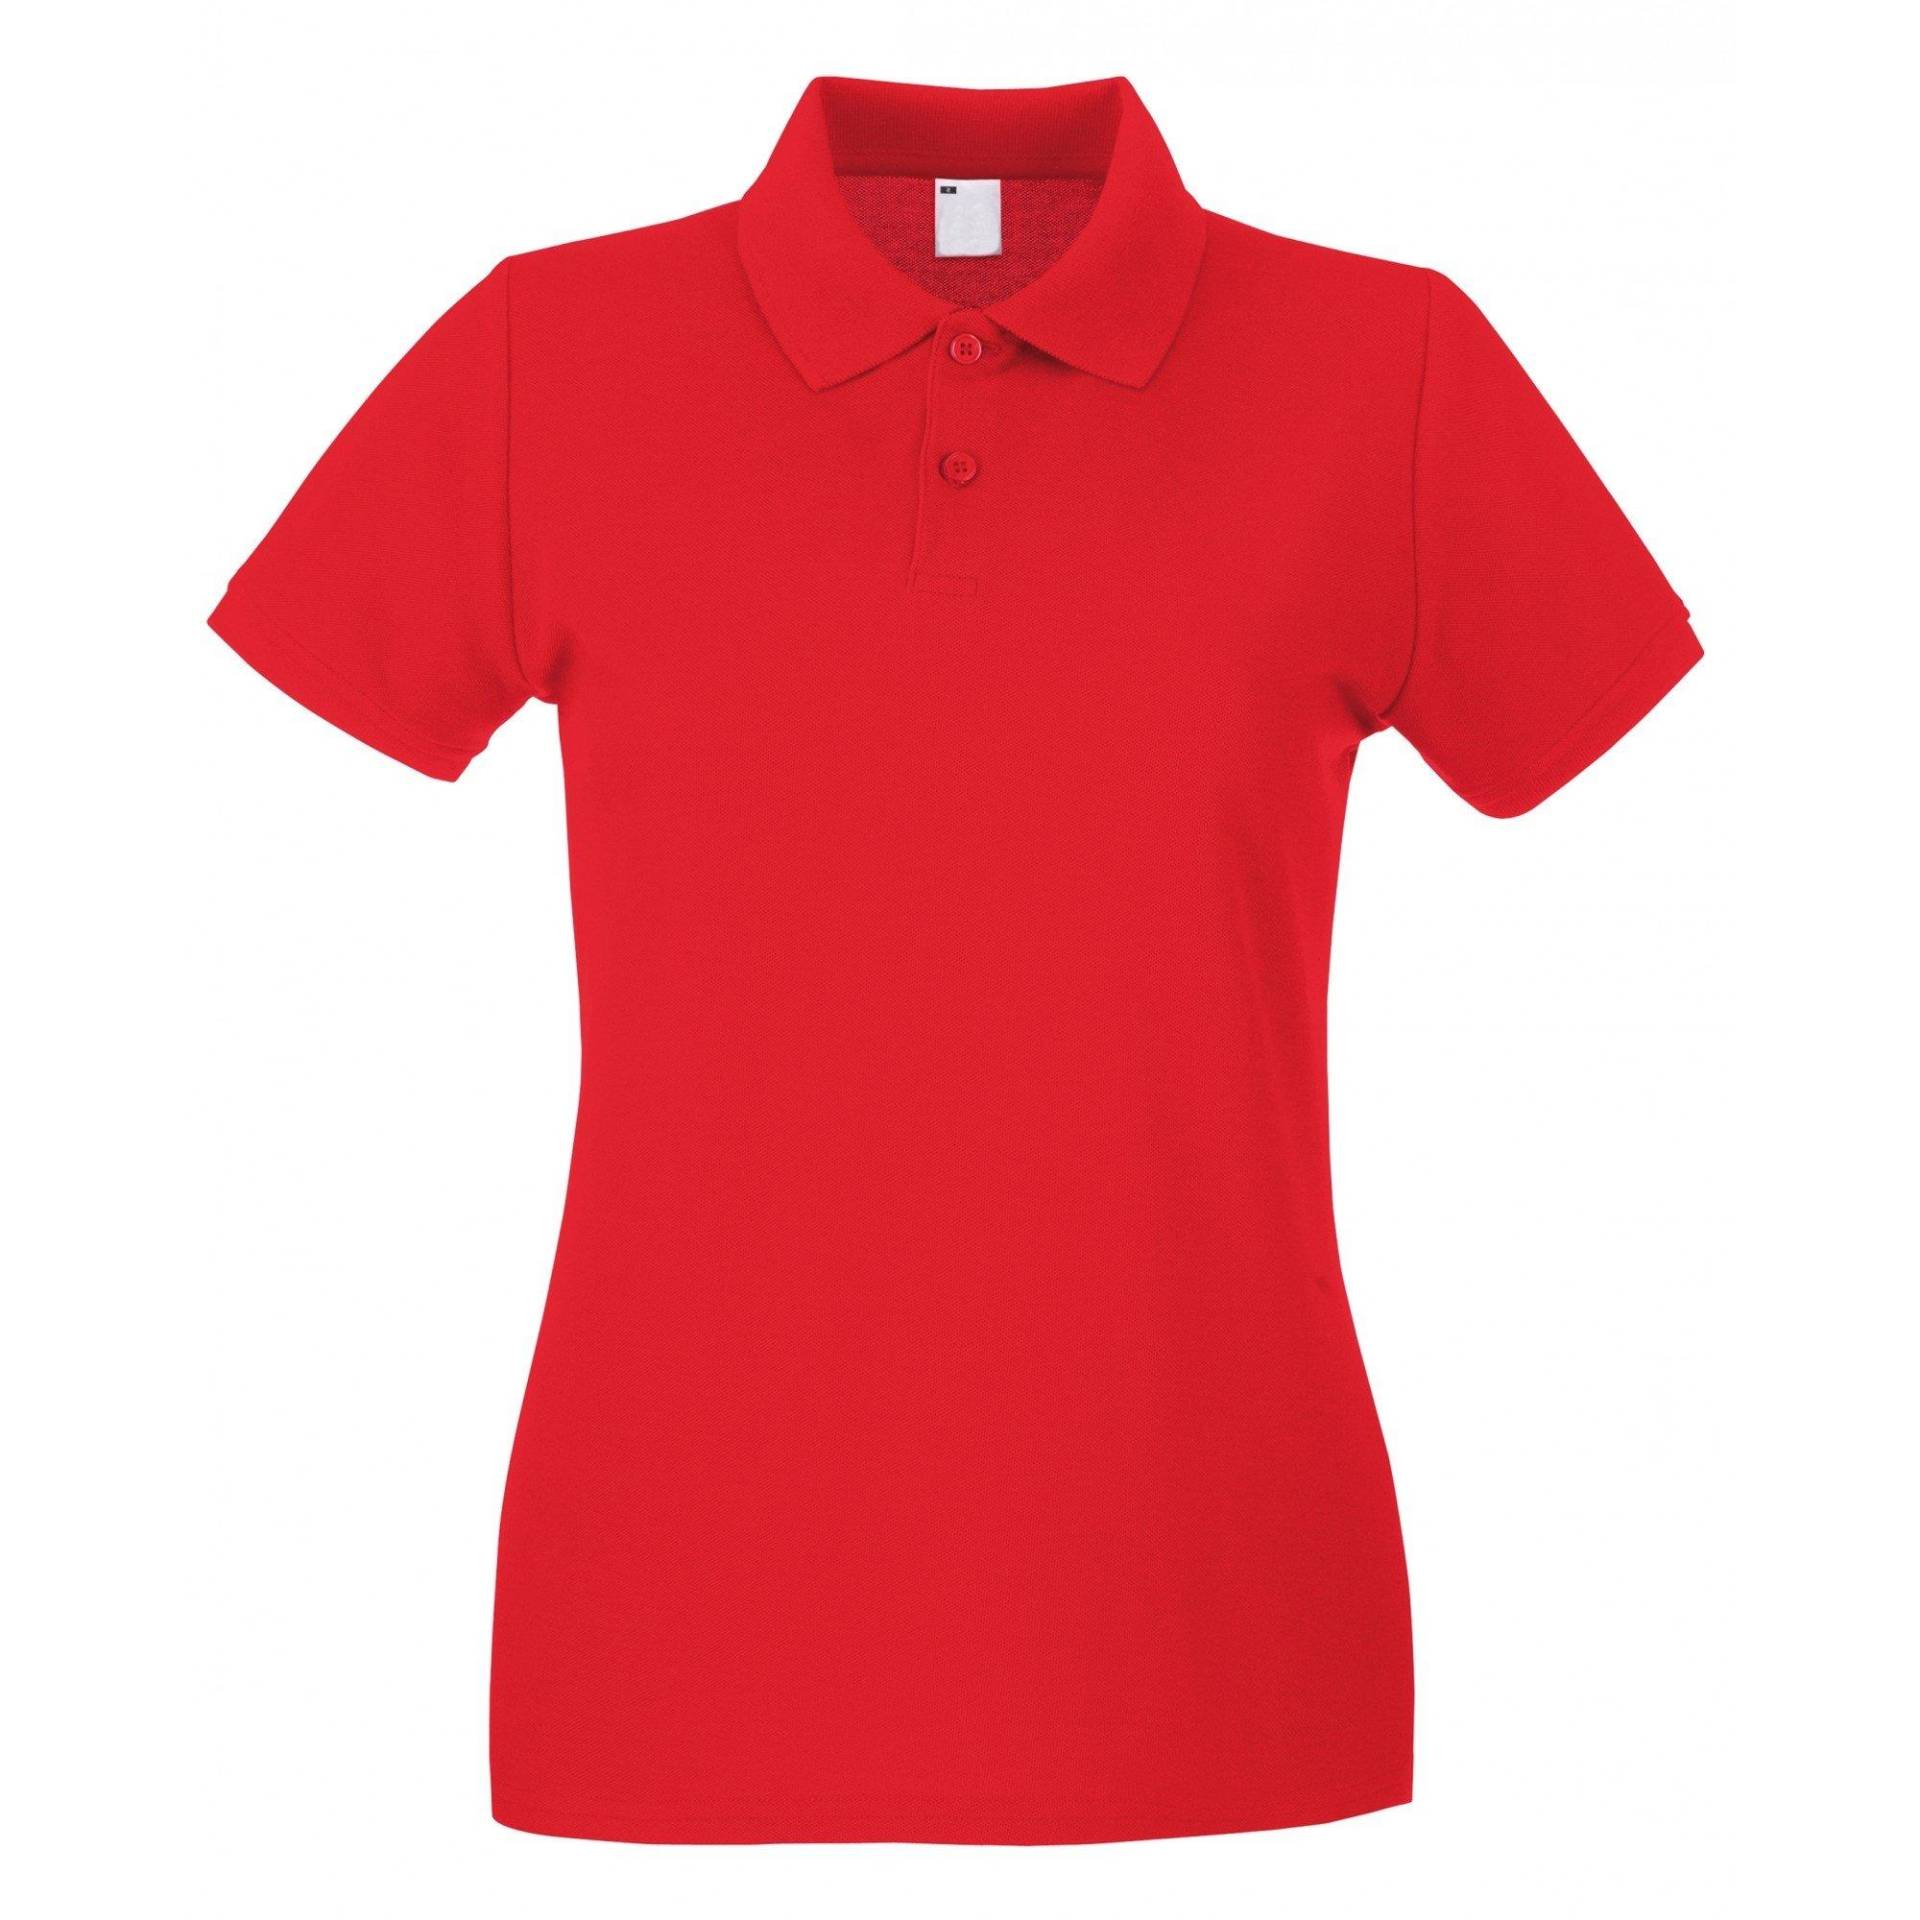 Poloshirt, Figurbetont, Kurzärmlig Damen Rot Bunt L von Universal Textiles